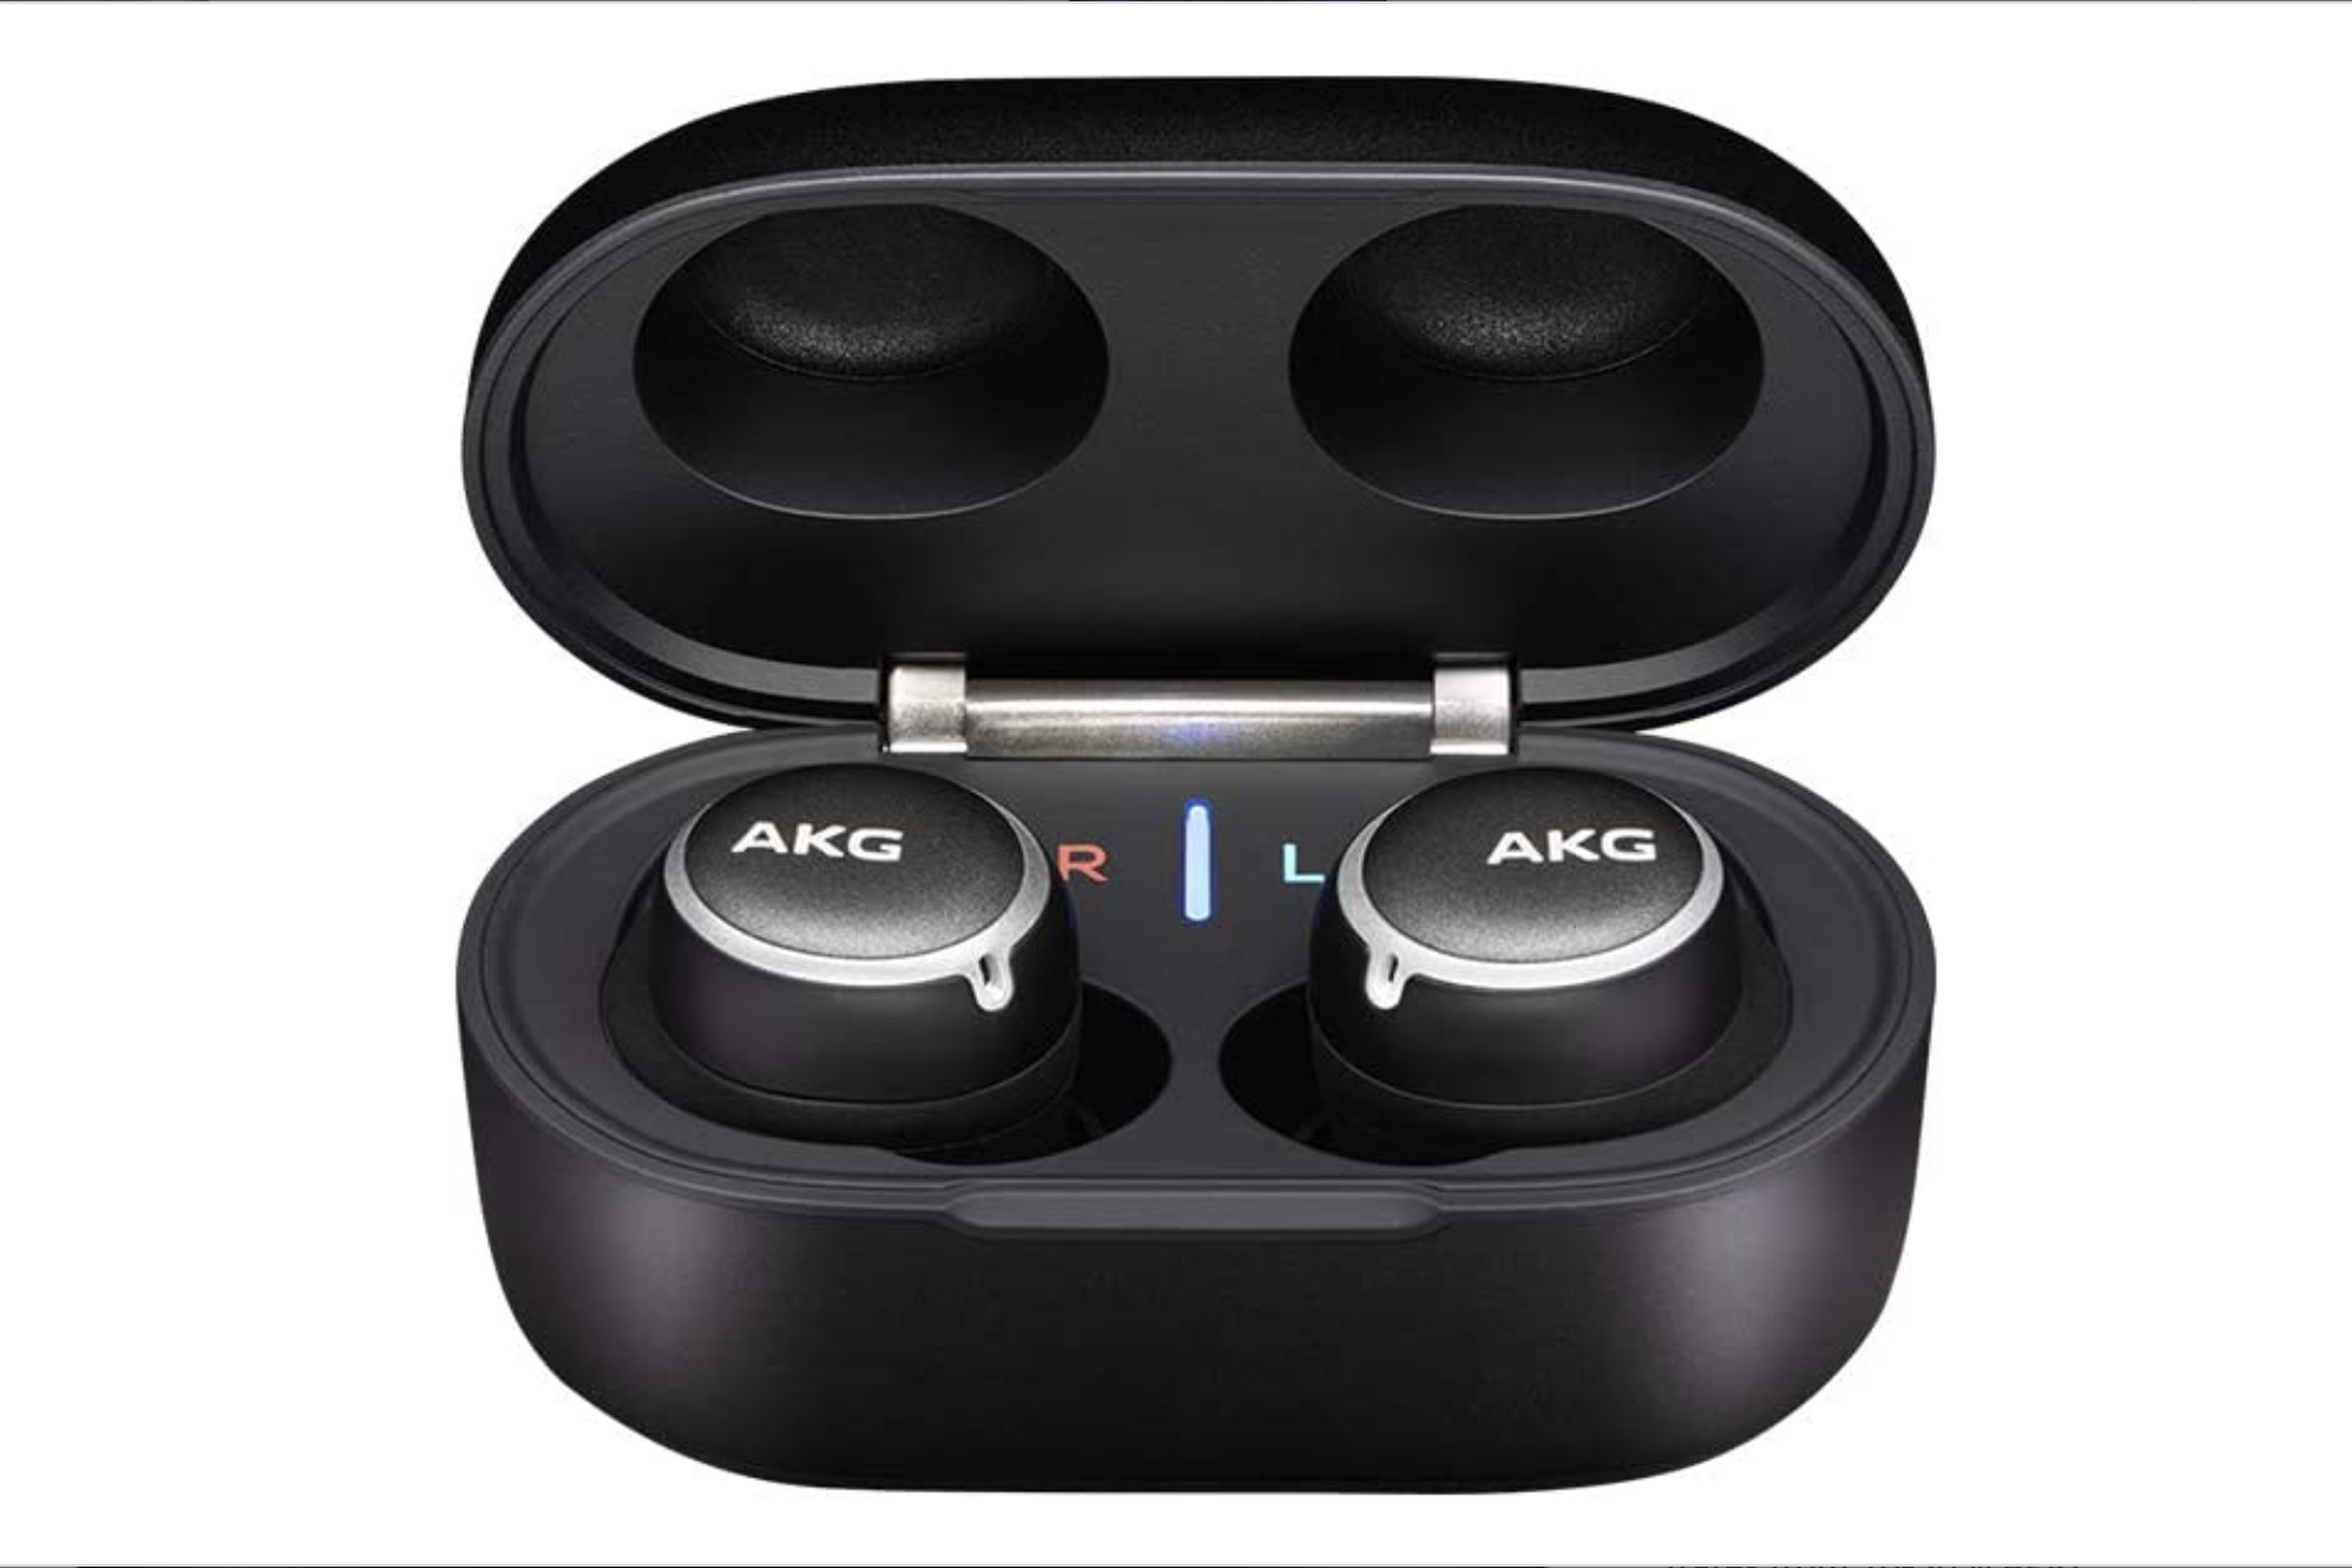 Set of ARG earbuds in a black case